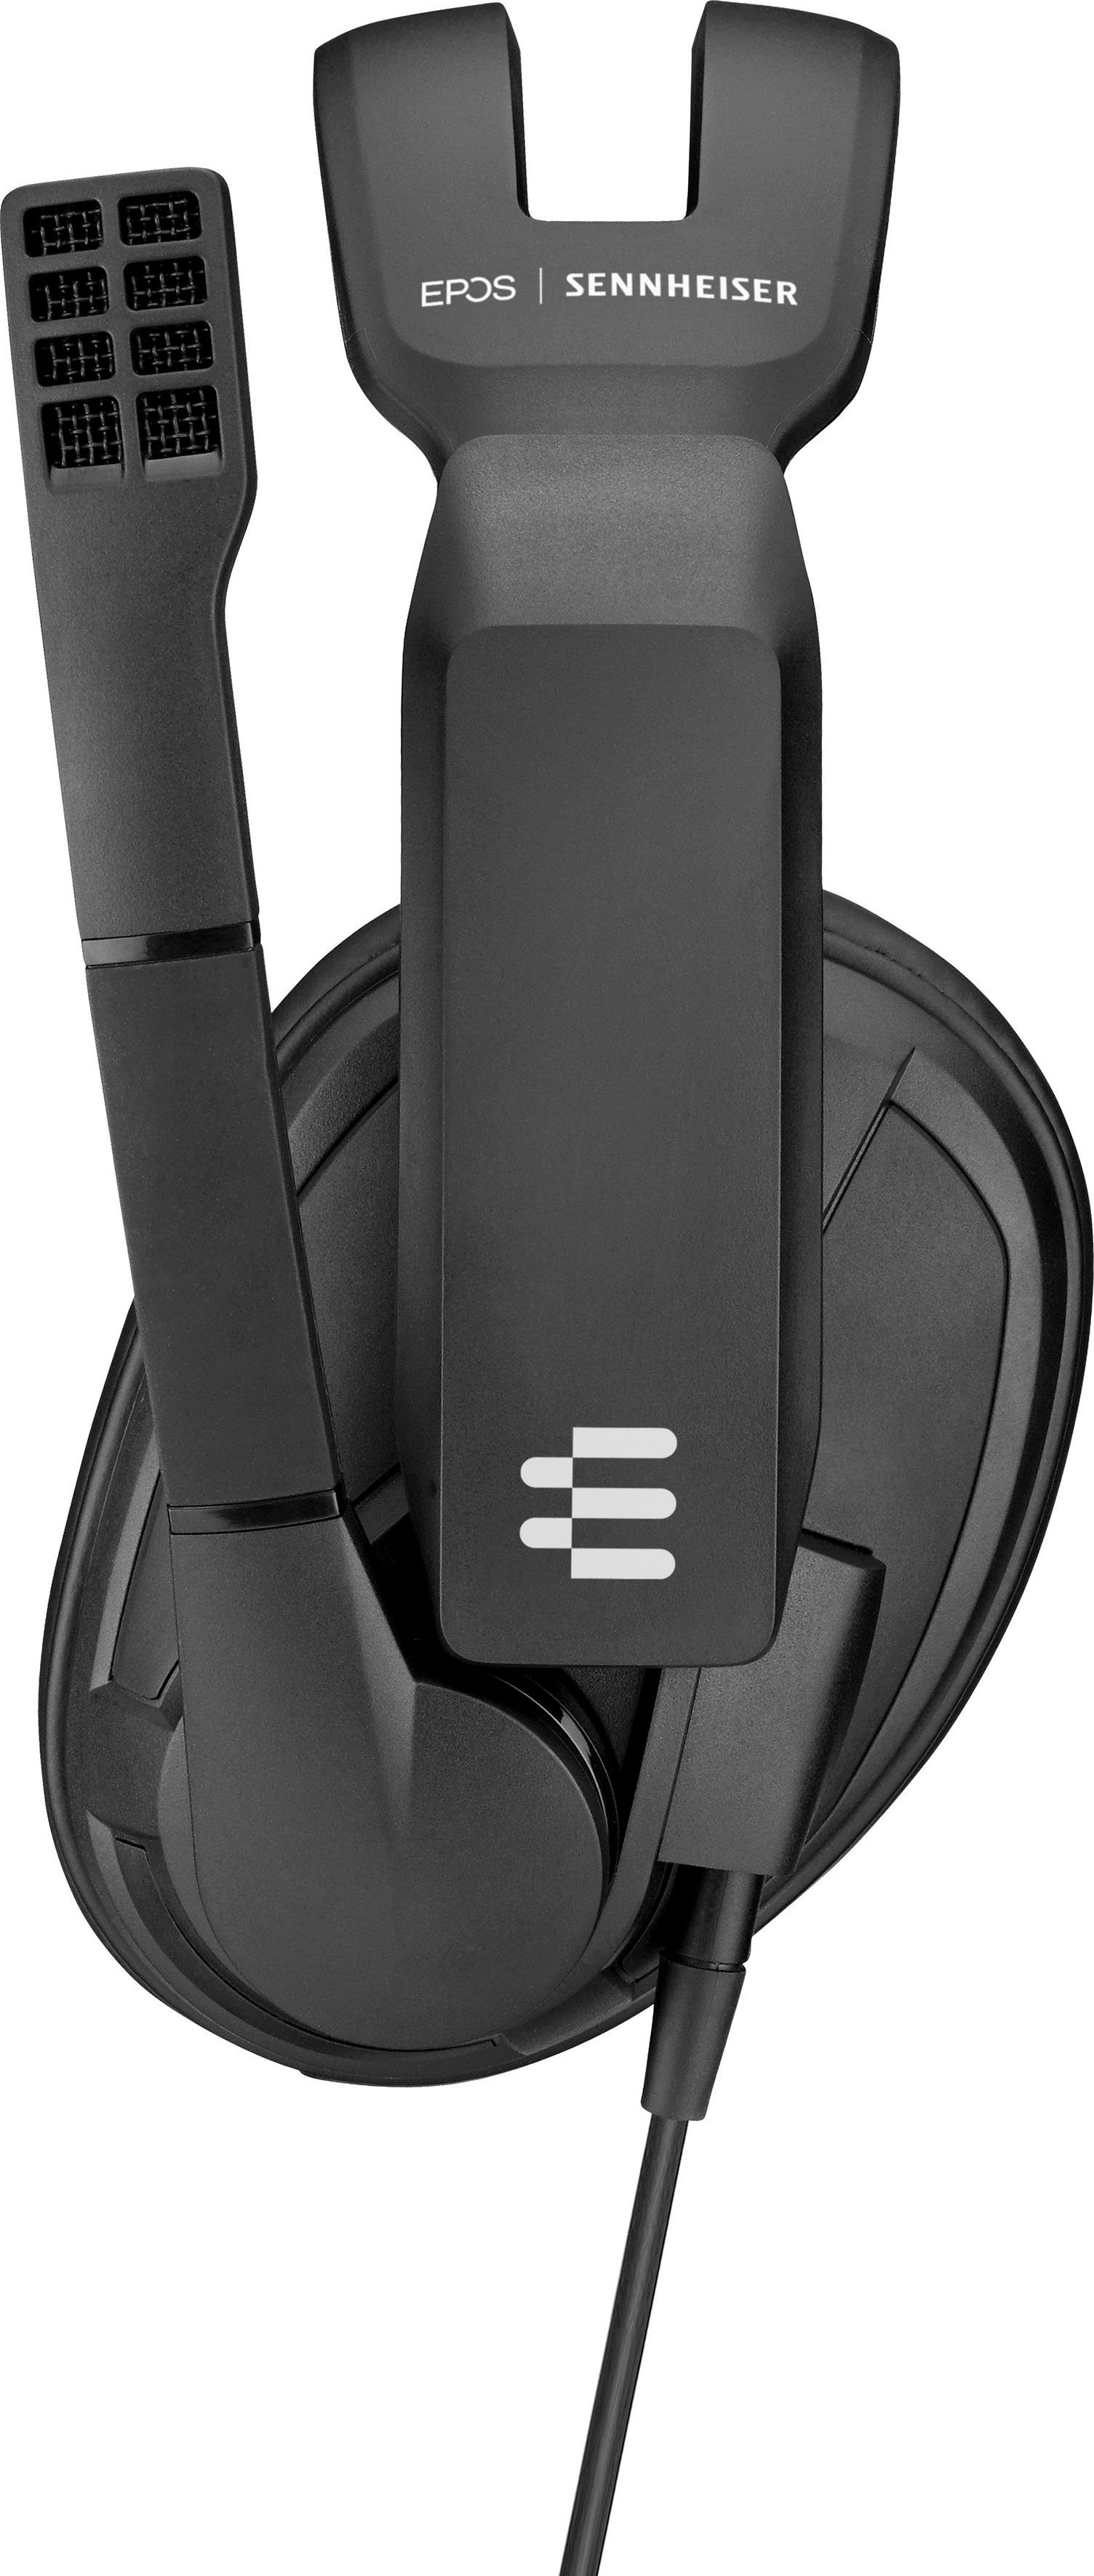 GSP EPOS, Gaming-Headset Sennheiser 302